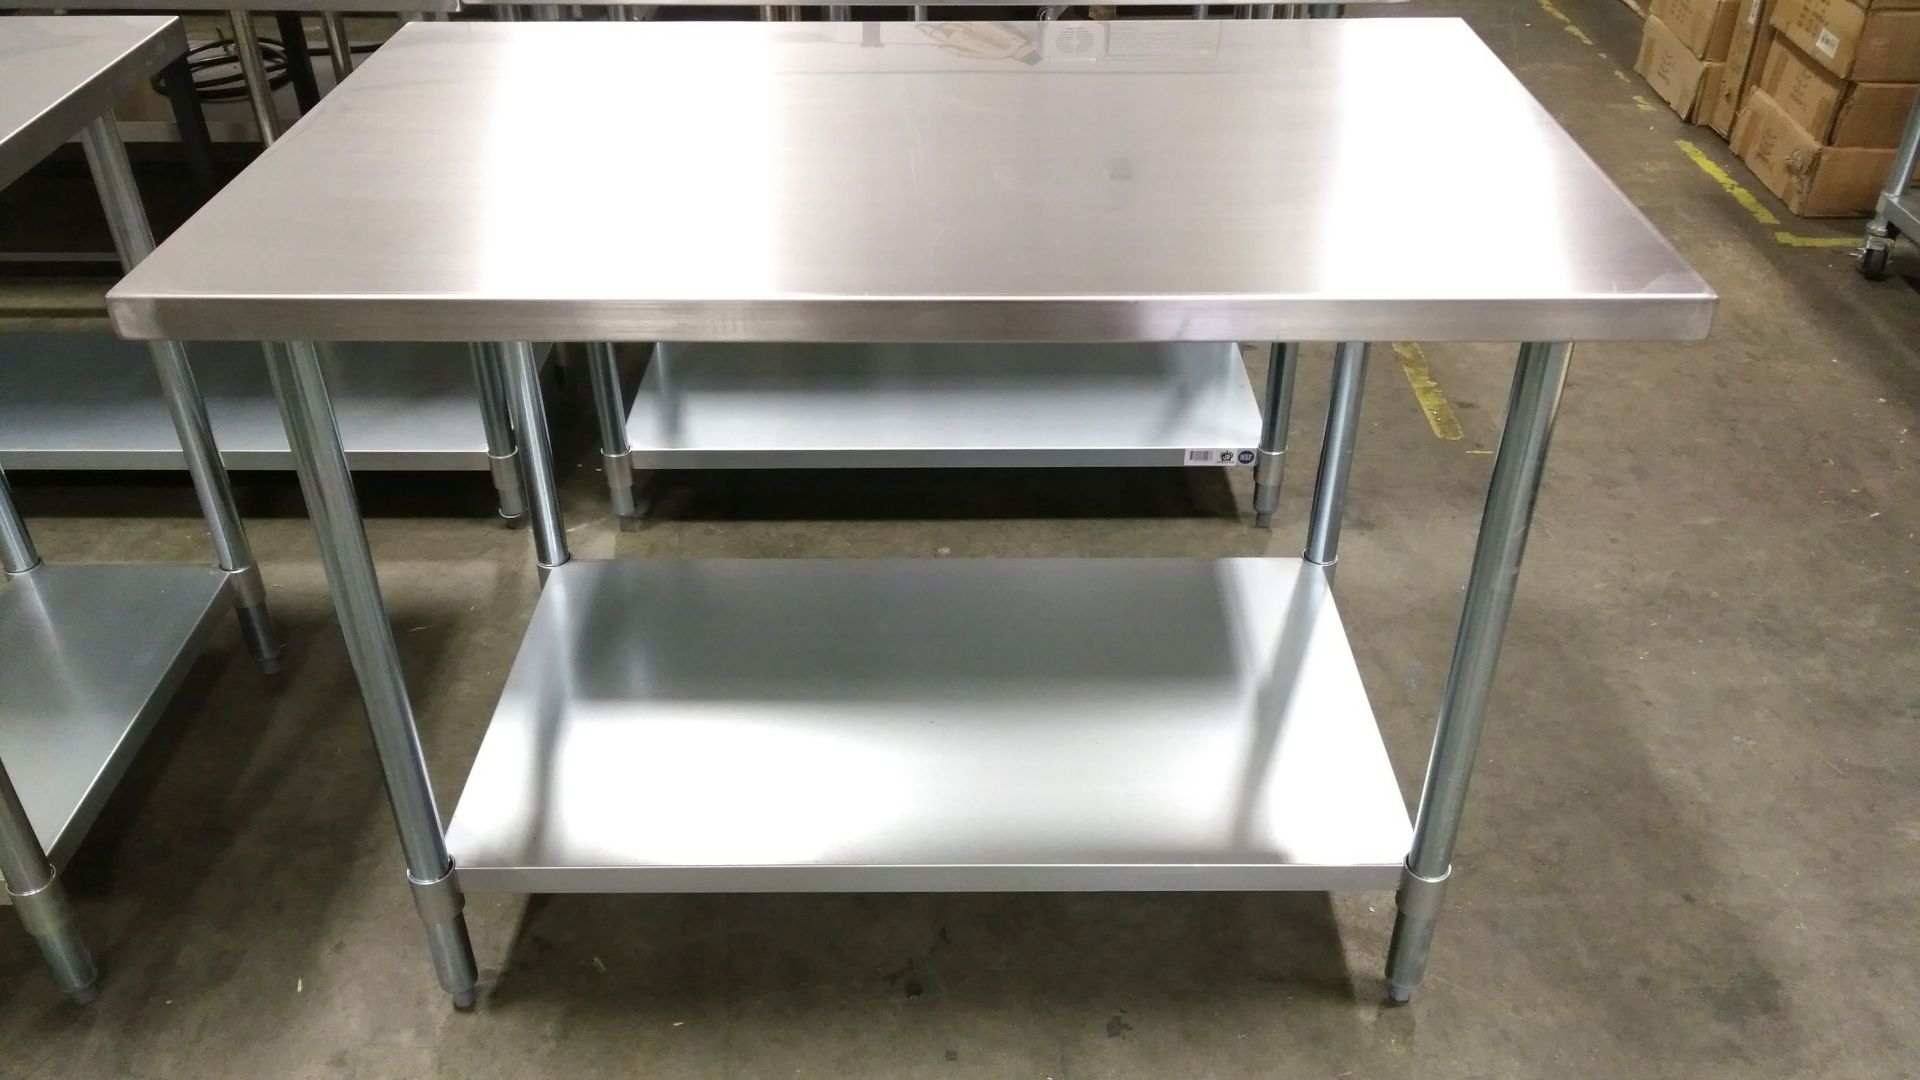 30" x 48" Stainless Steel Work Table, Galvanized Undershelf